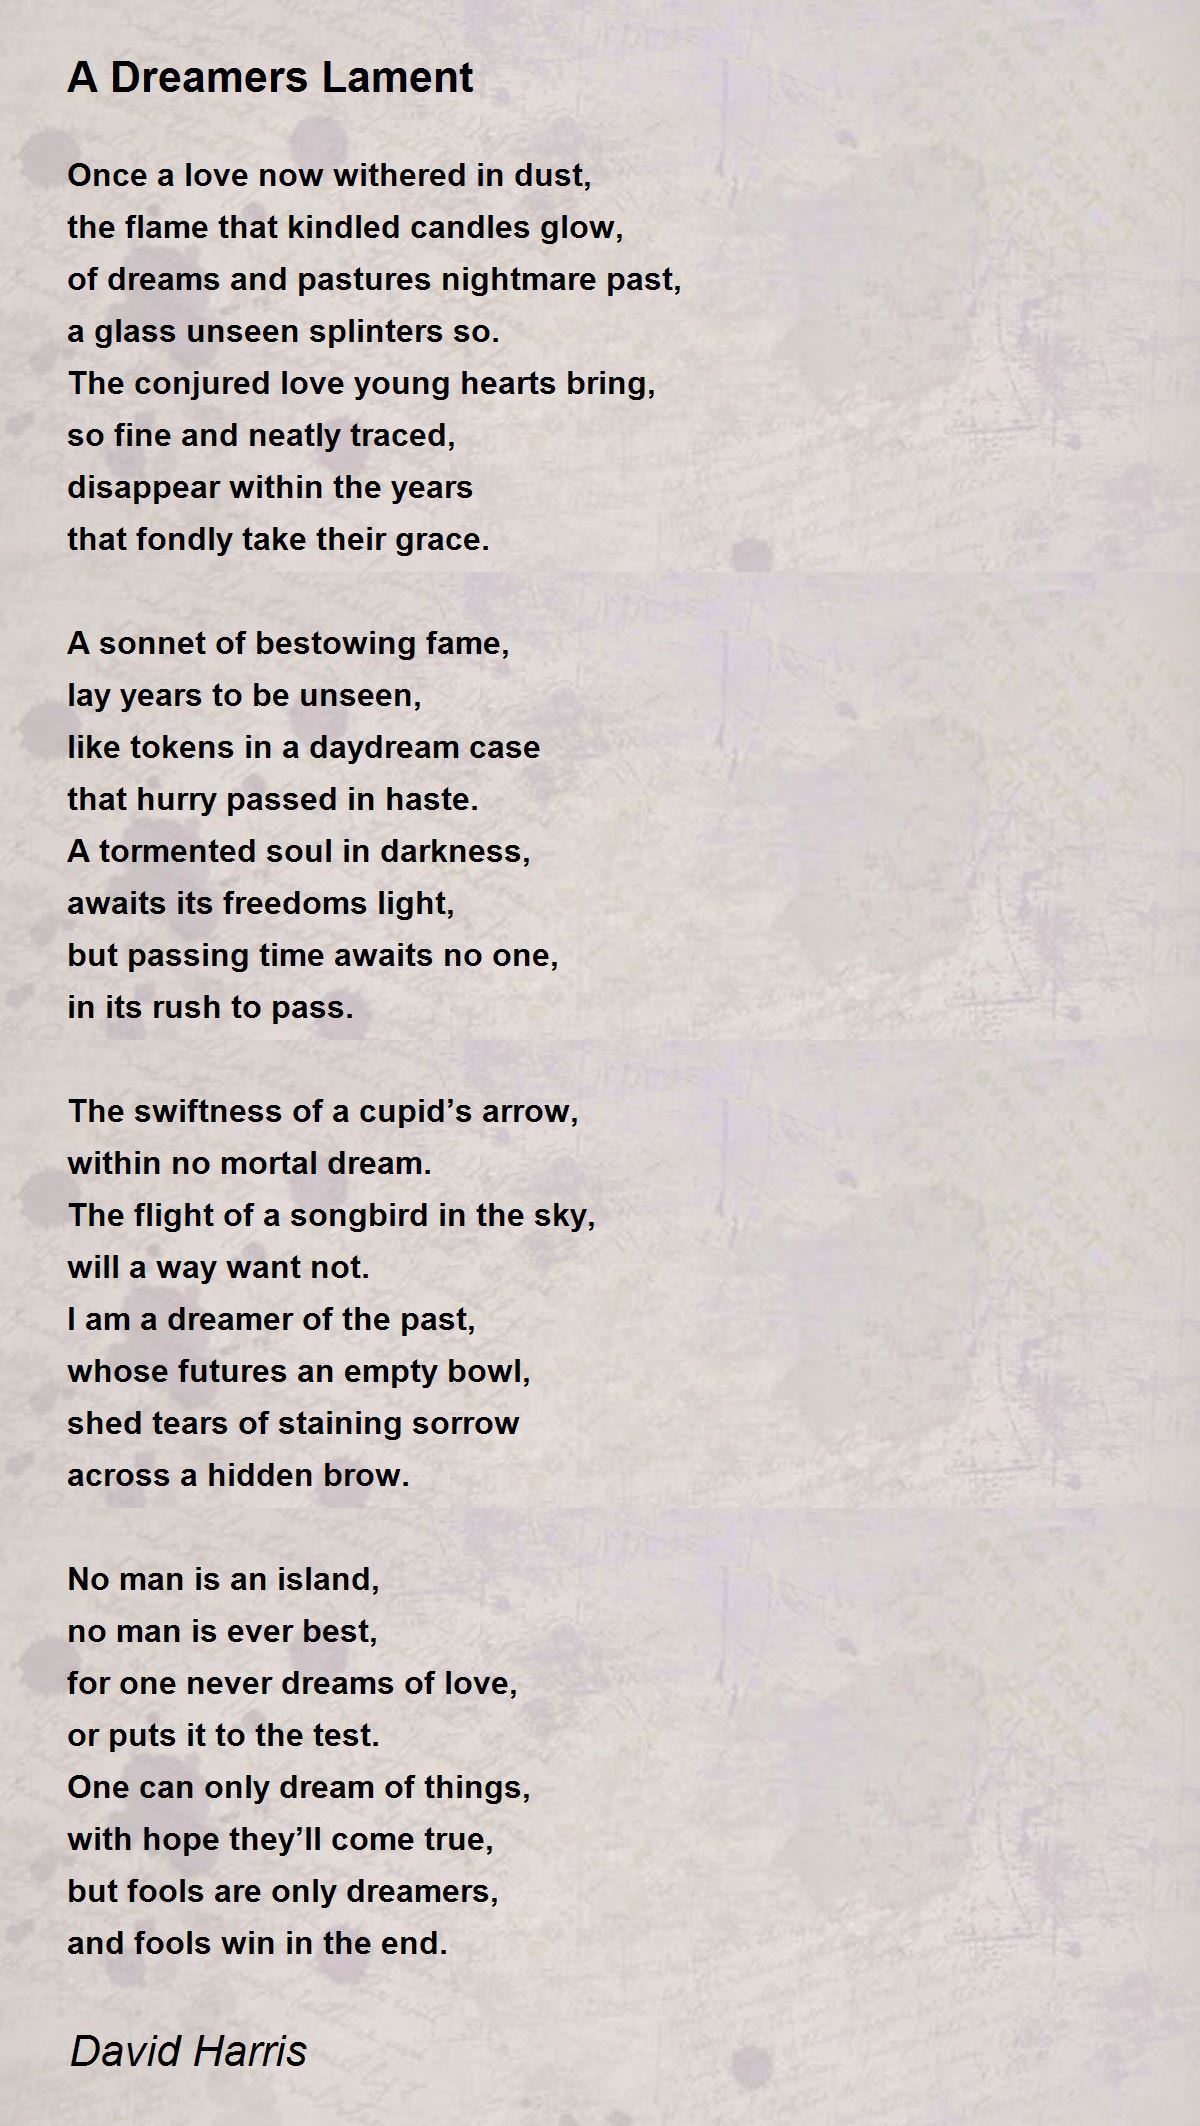 A Dreamers Lament by David Harris - A Dreamers Lament Poem